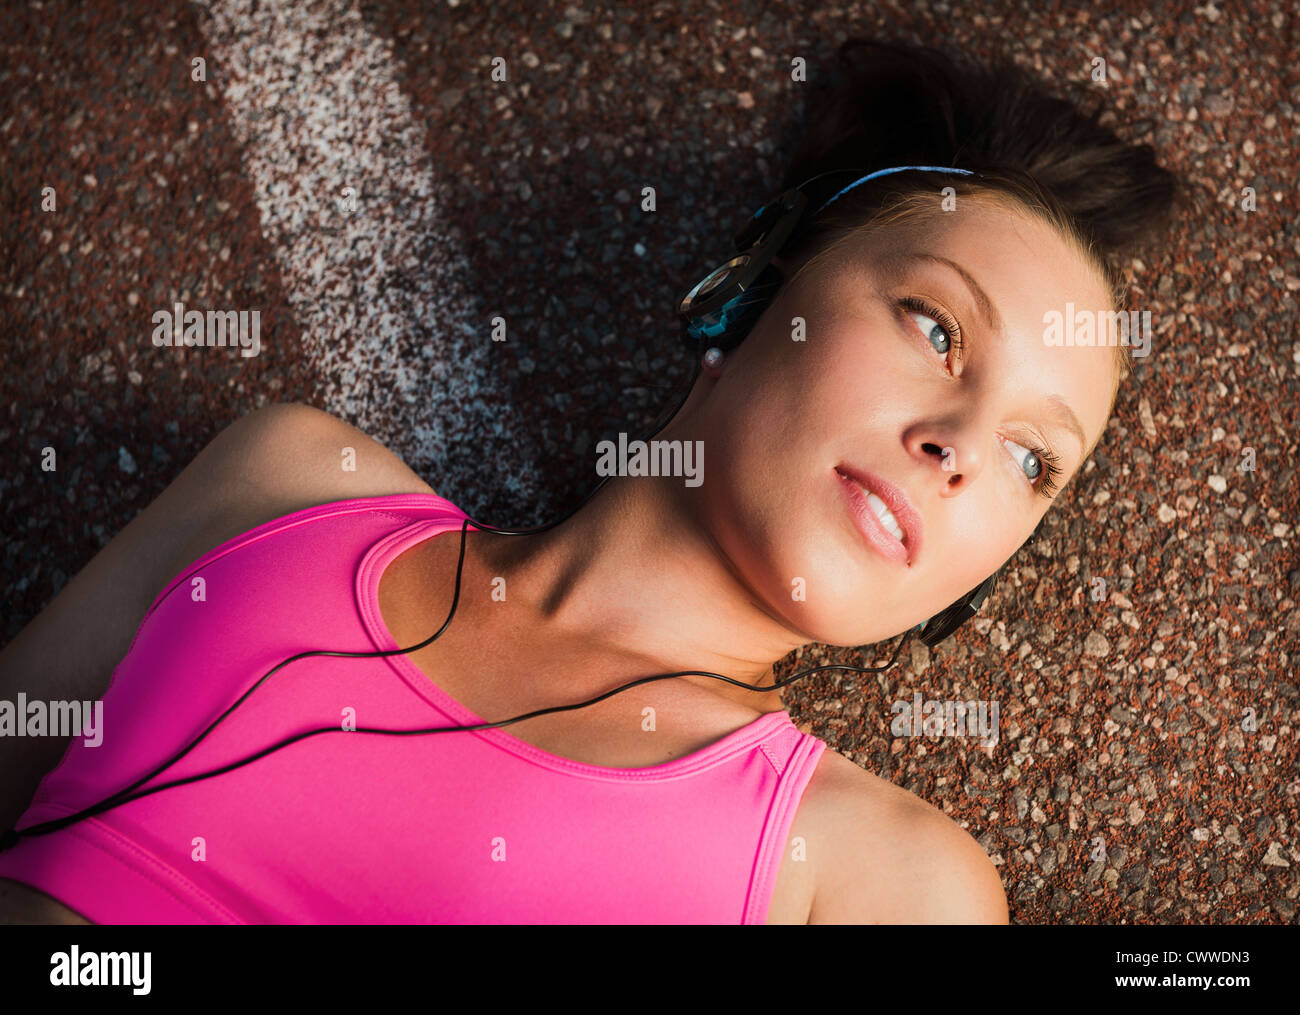 Woman laying on sidewalk Stock Photo